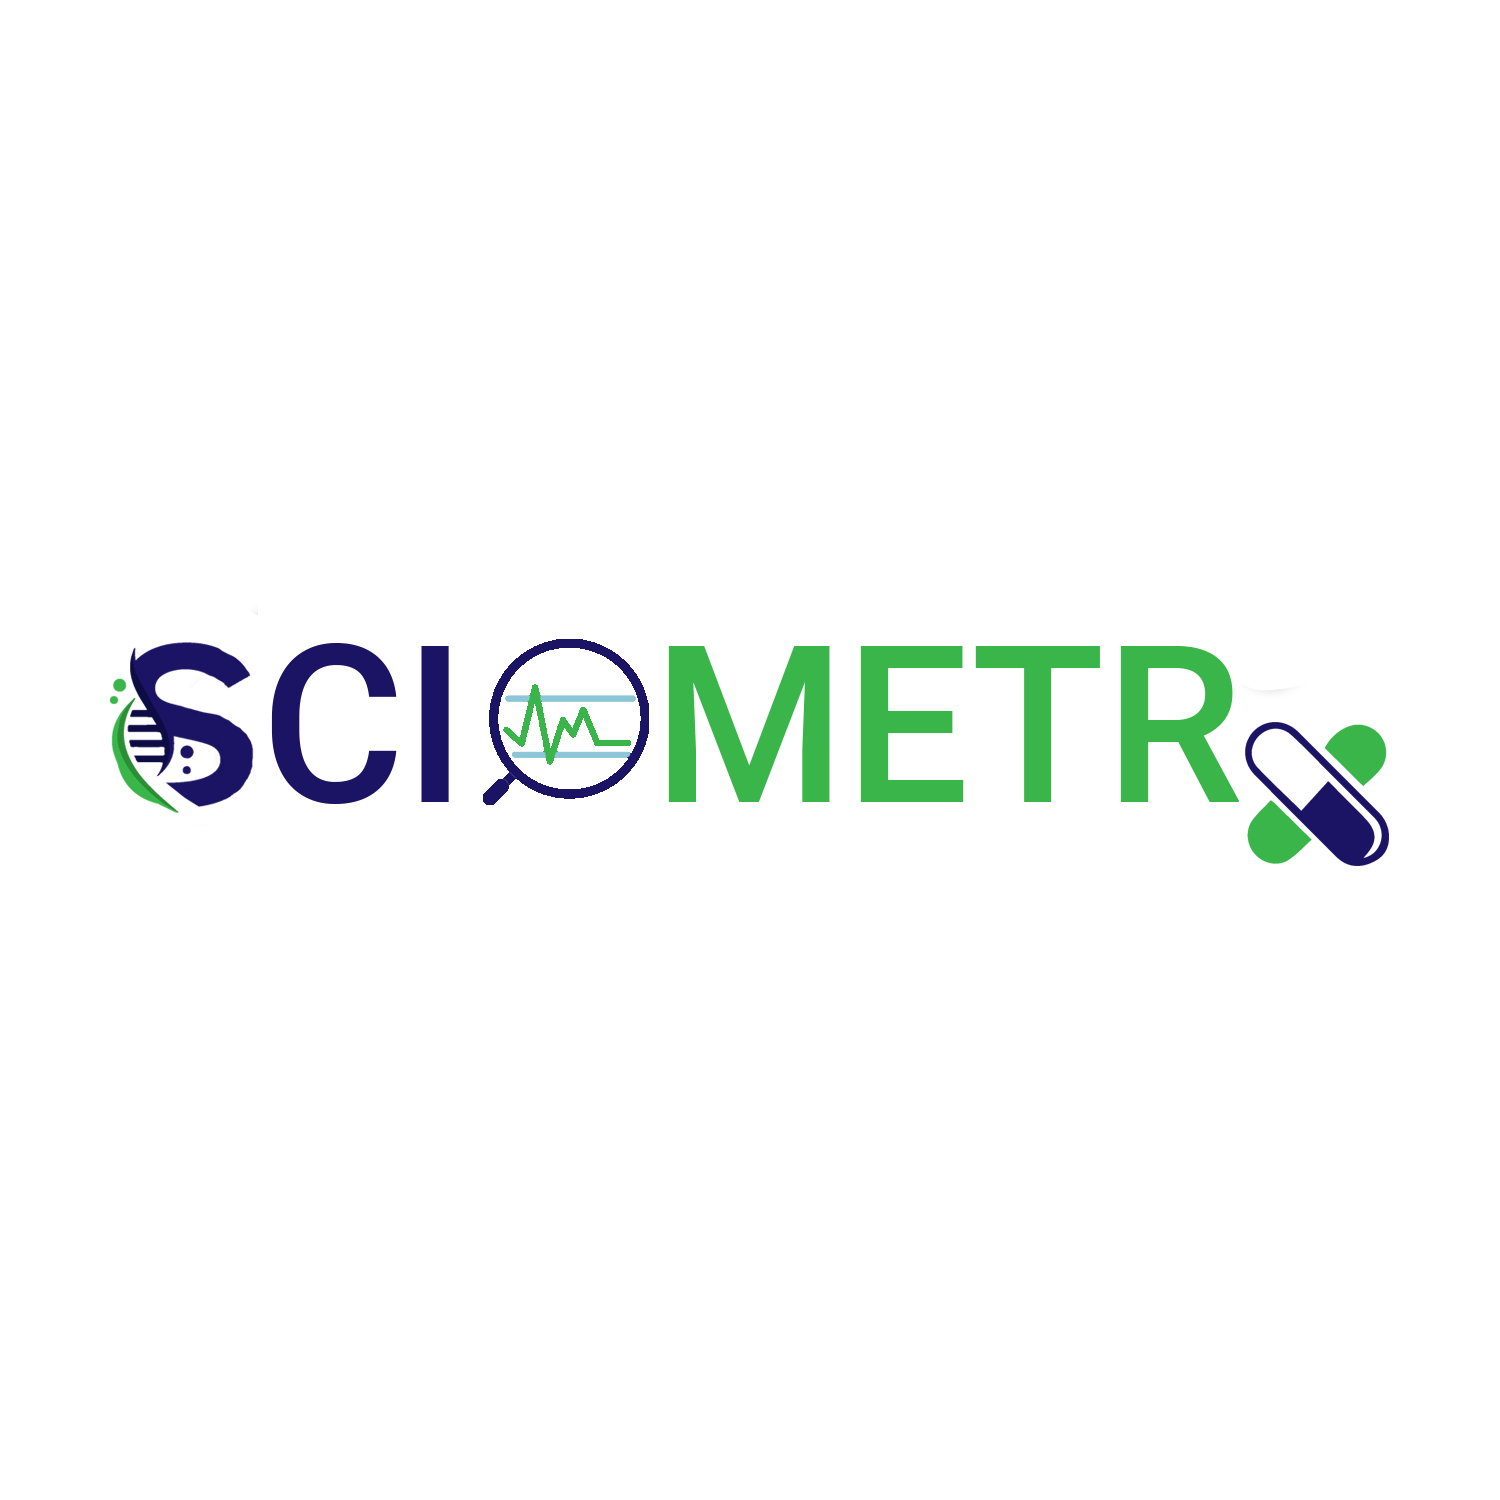 Sleek Company Logo - Modern, Bold, It Company Logo Design for SCIOMETRX